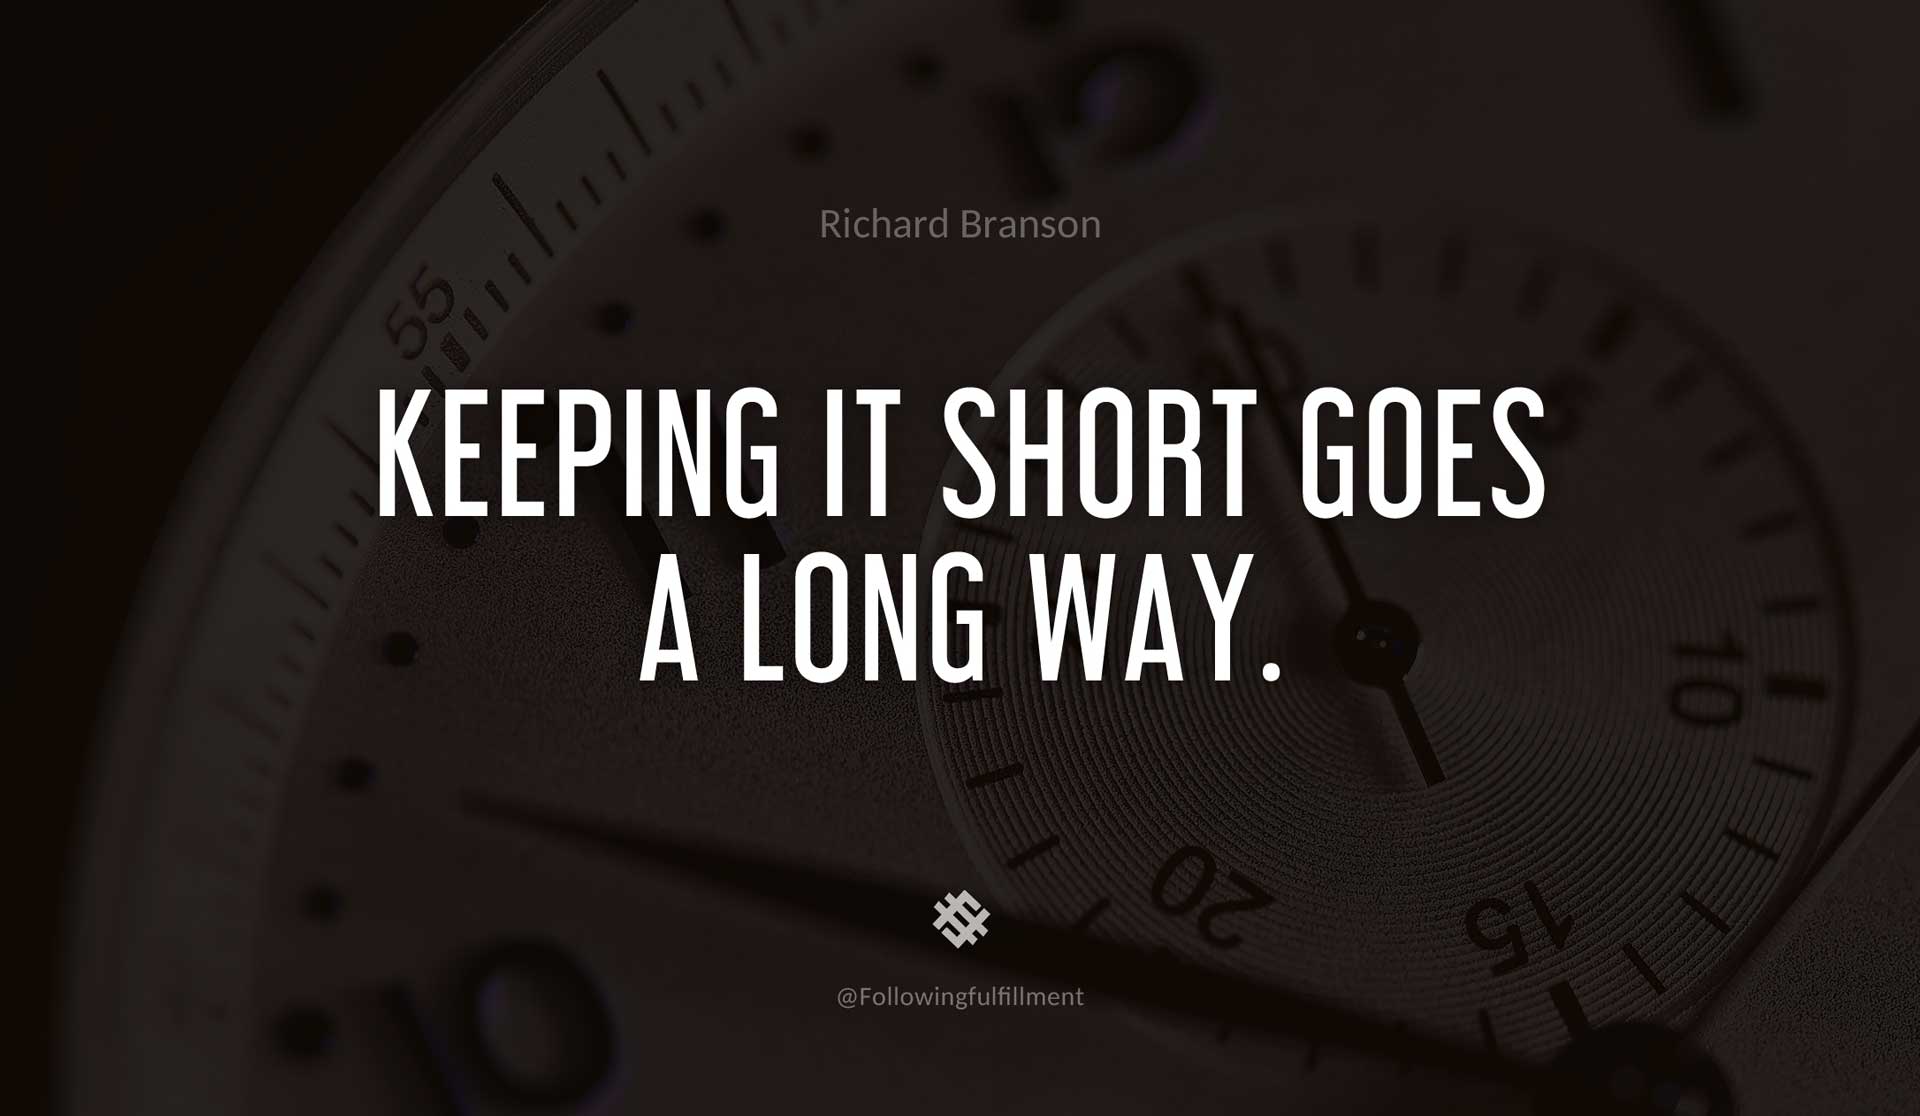 Keeping-it-short-goes-a-long-way.-RICHARD-BRANSON-Quote.jpg